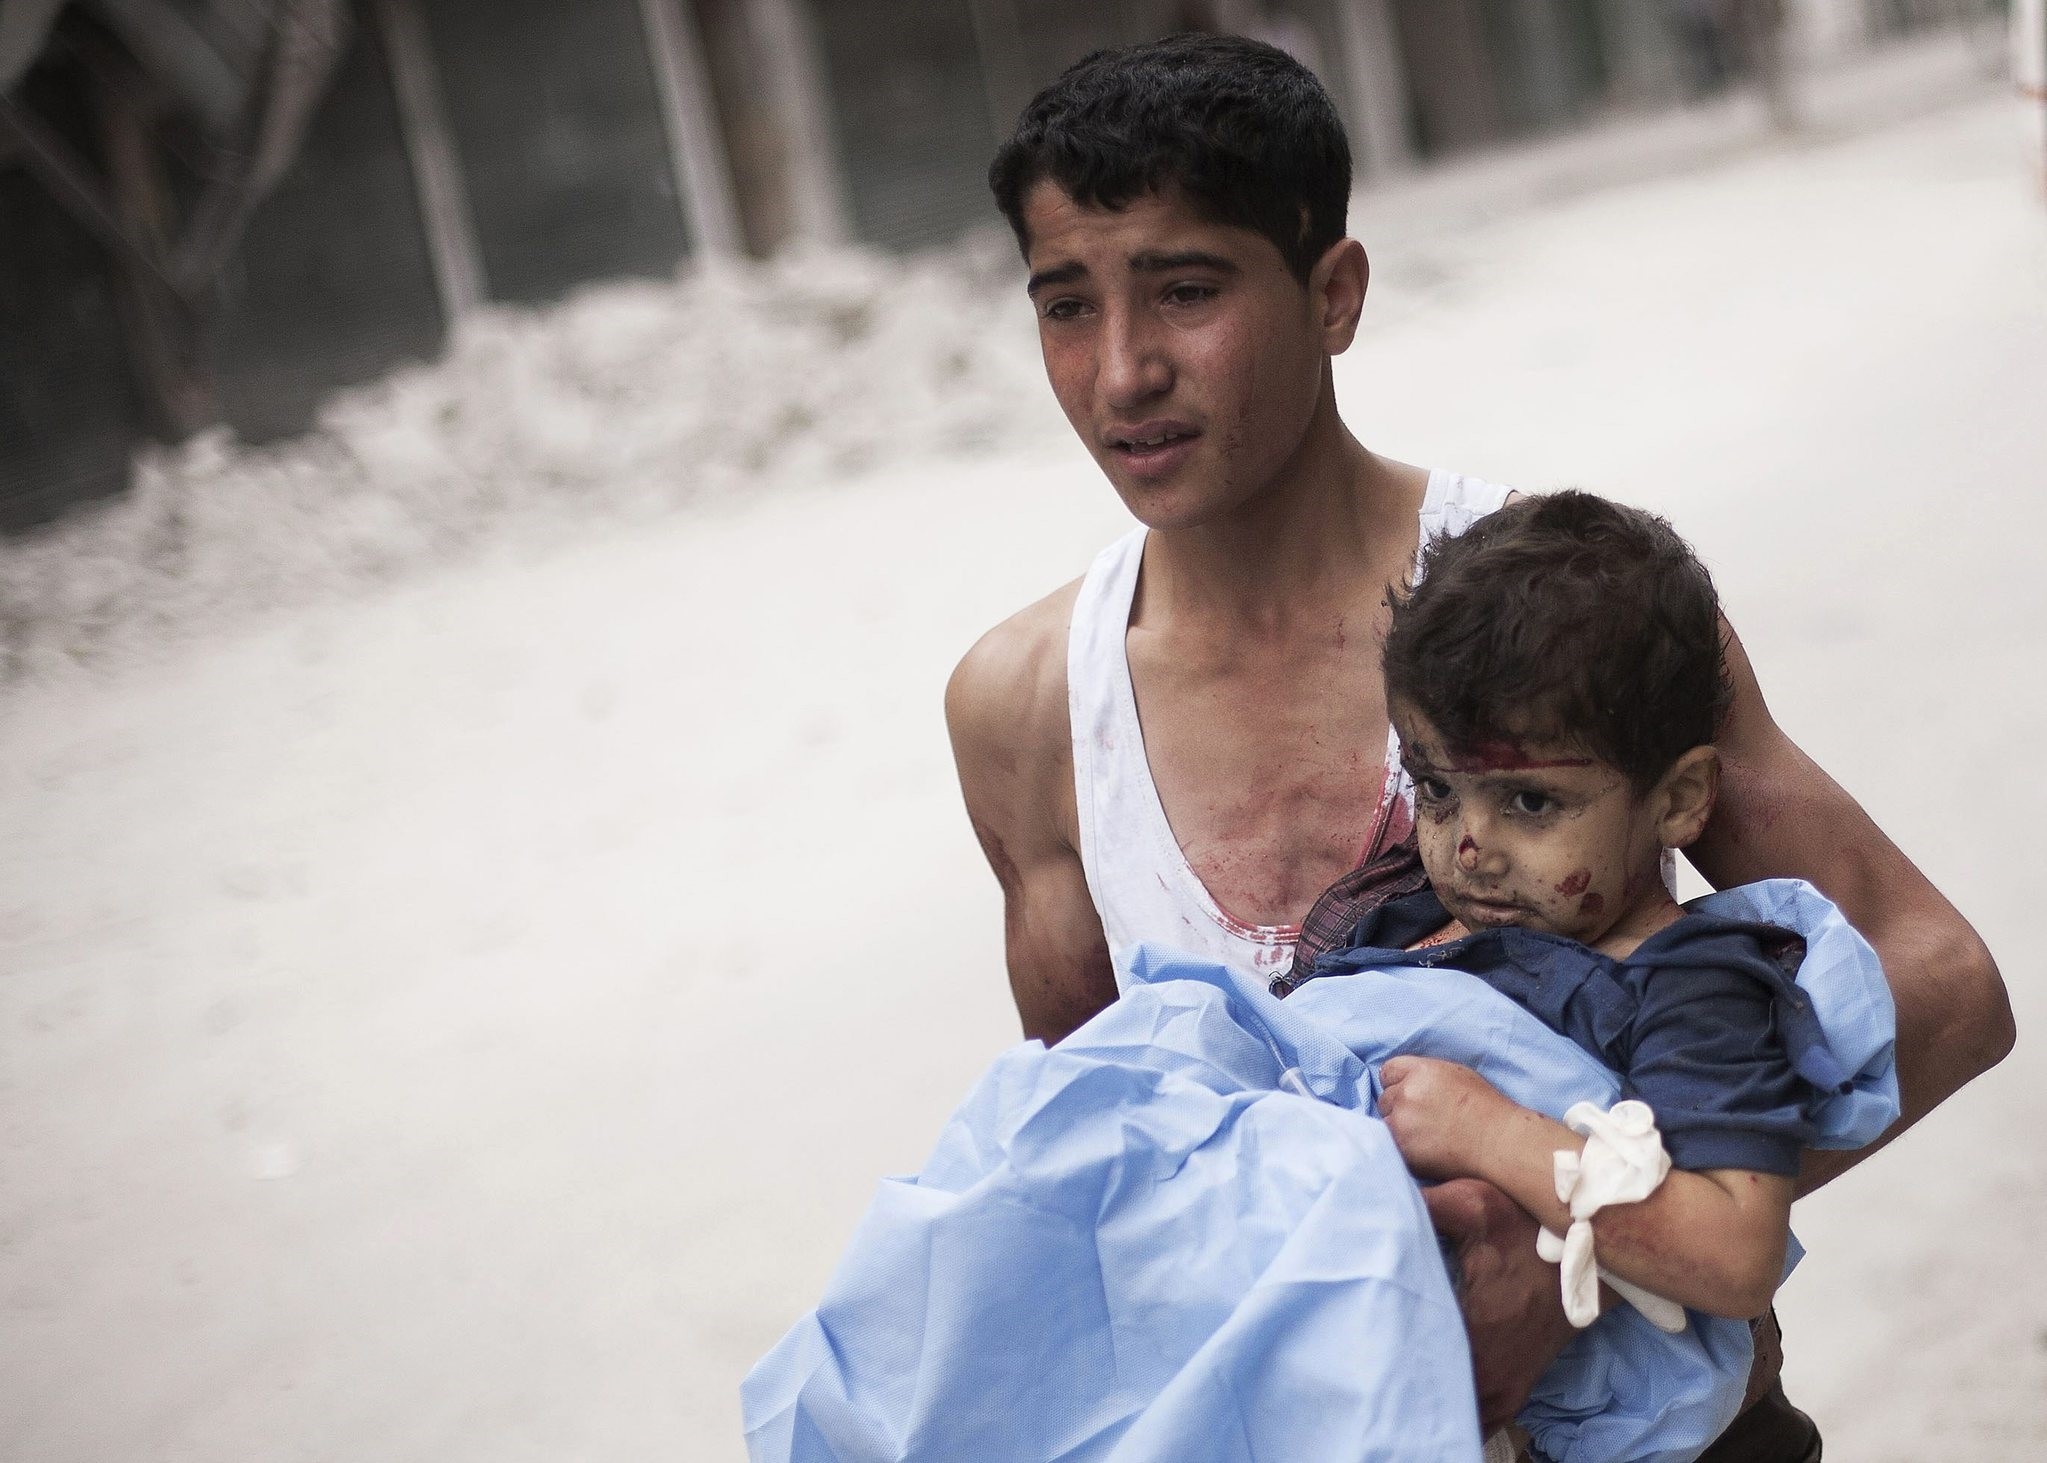 A Syrian youth holds a child wounded by Syrian Army shelling near Dar El Shifa hospital in Aleppo, Syria, Thursday, Oct. 11, 2012. (AP Photo)